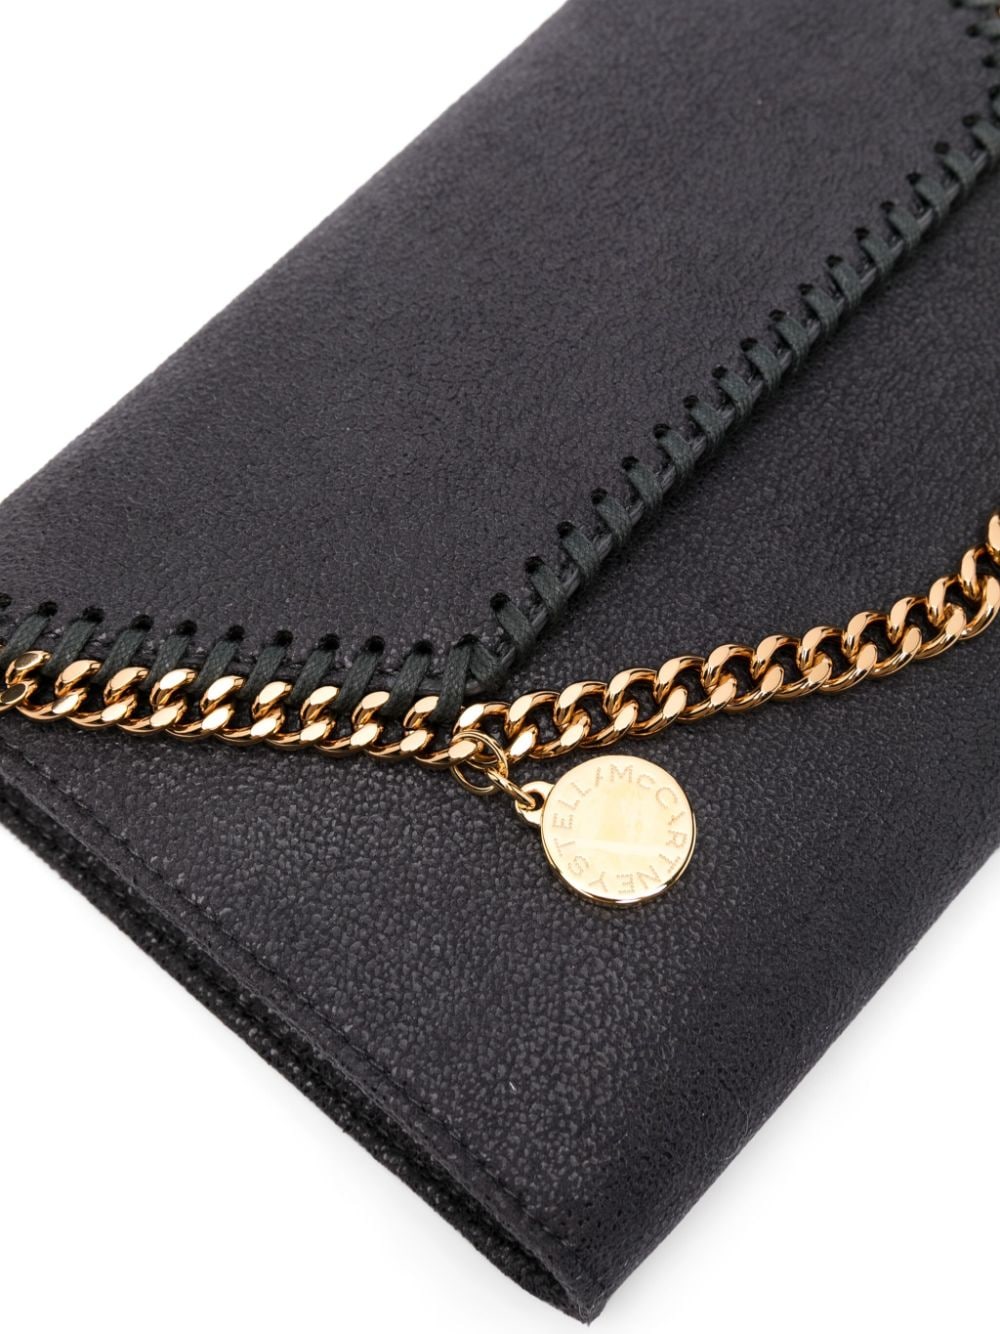 STELLA MCCARTNEY Charcoal Grey Chain-Link Trim Handbag for Women